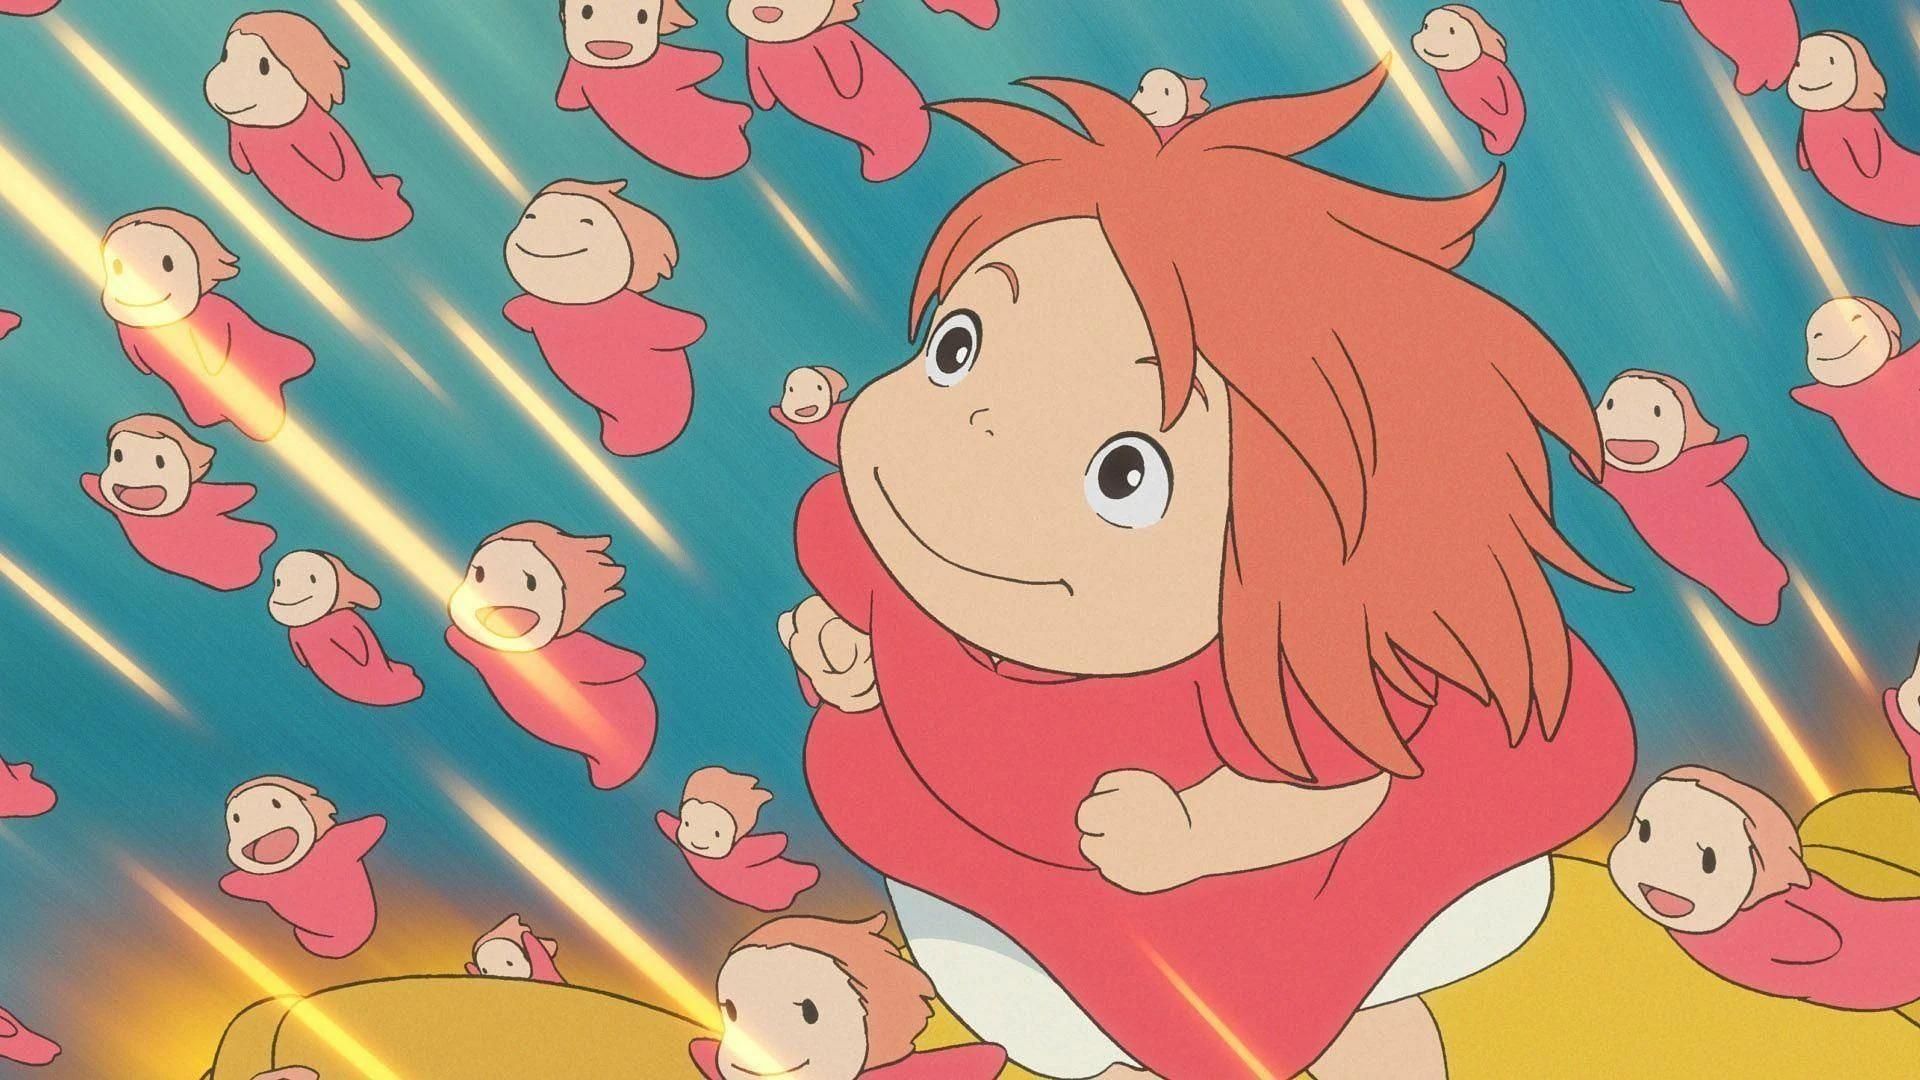 Ponyo (Image via Studio Ghibli)